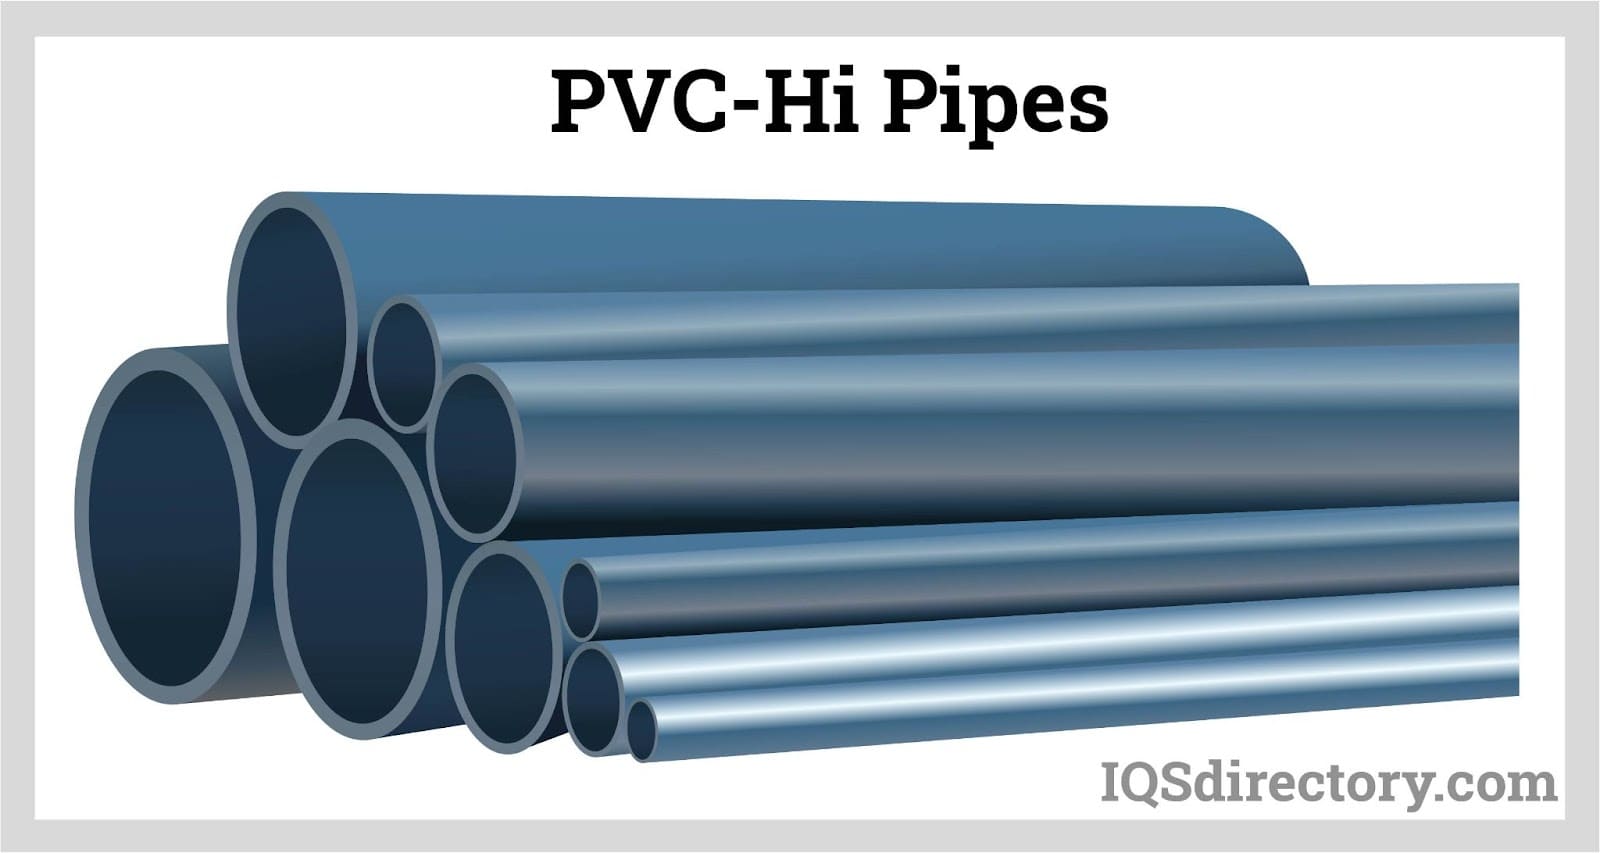 PVC-Hi Pipes